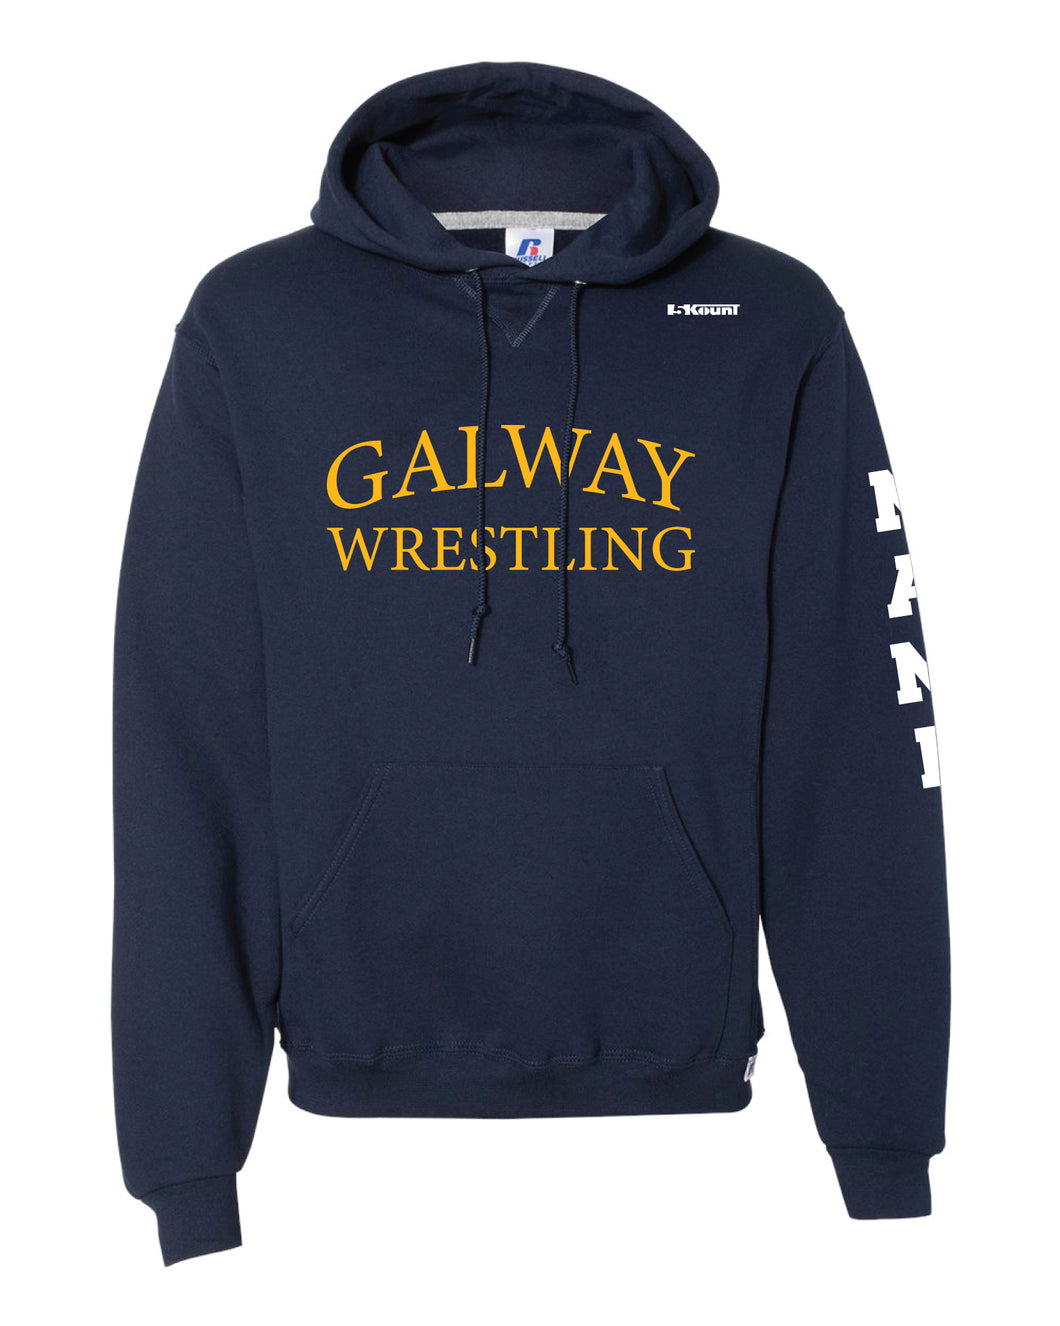 Galway Wrestling Russell Athletic Cotton Hoodie - Navy - 5KounT2018